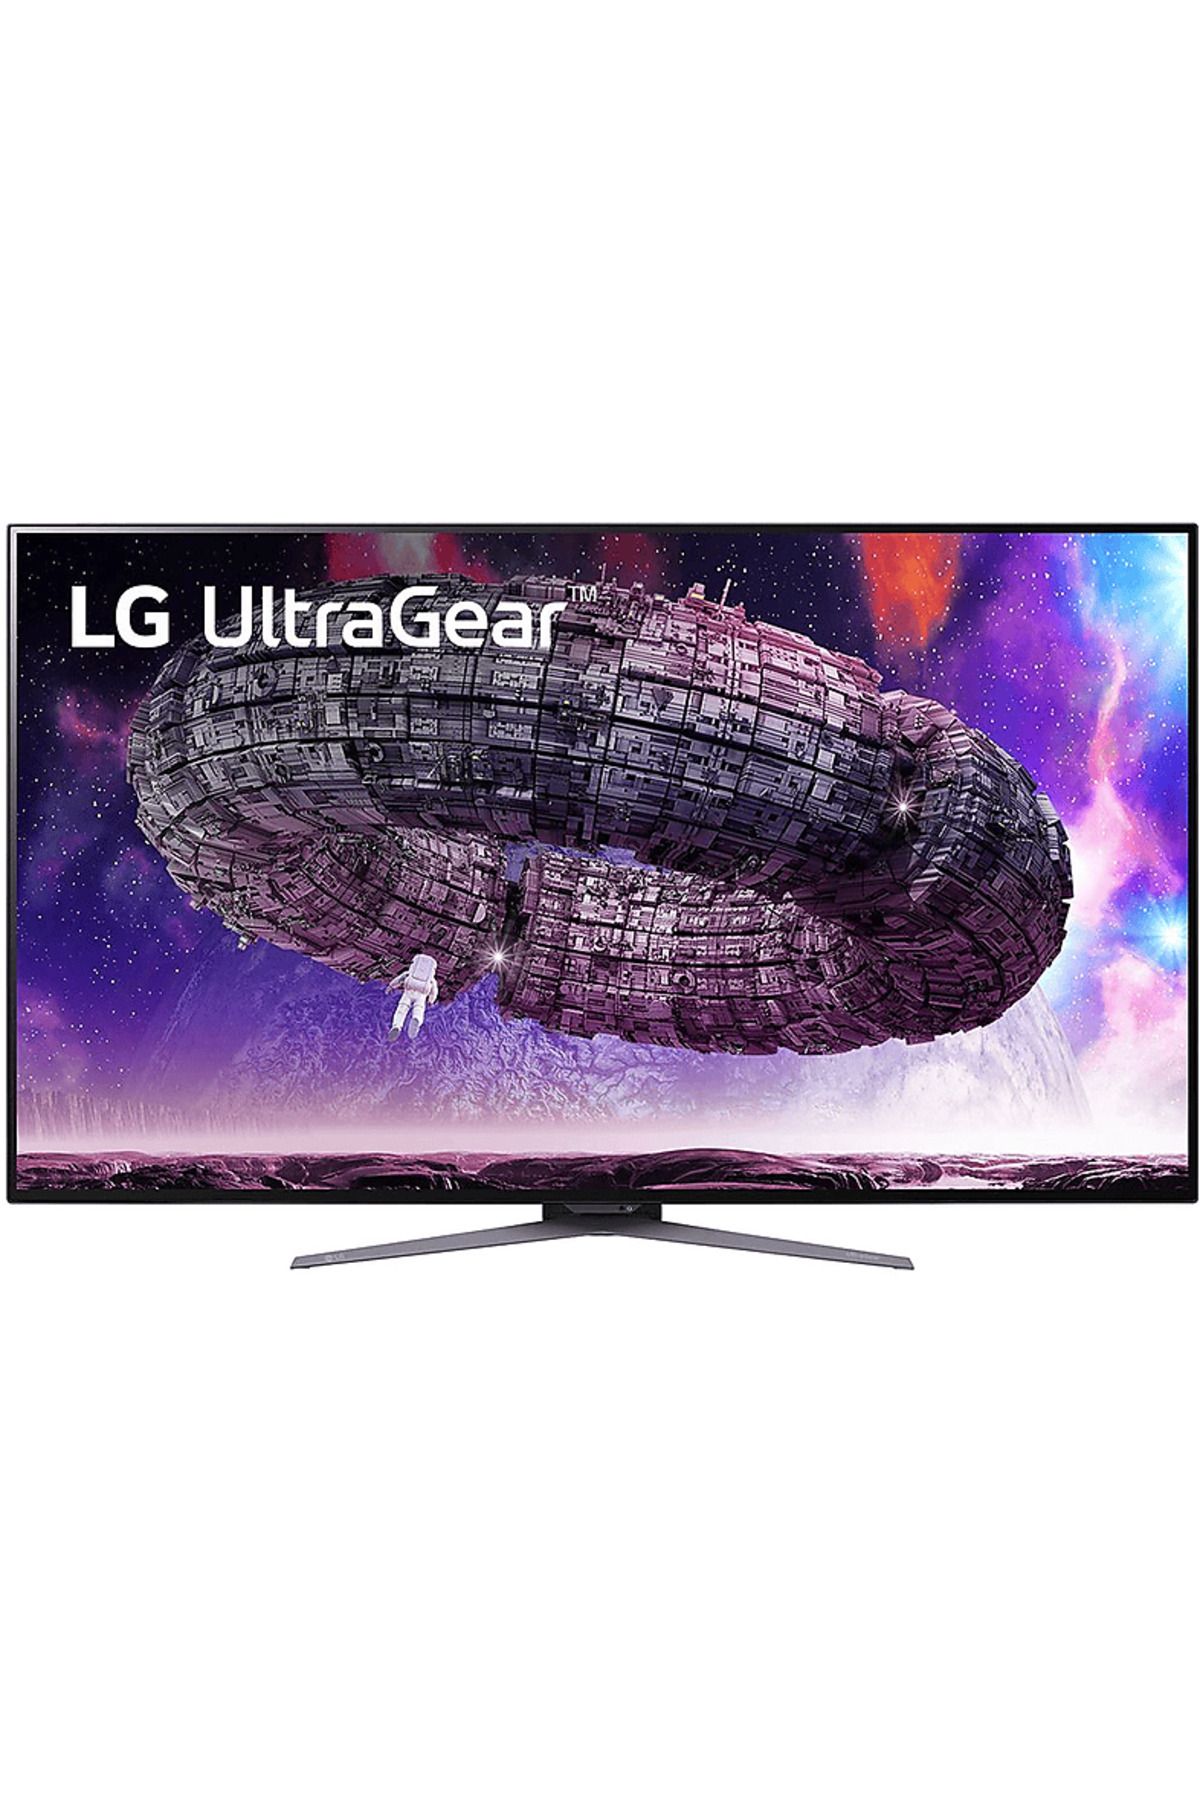 LG UltraGear 48GQ900 48" 138Hz 0.1ms Gsync FreeSync HDR10 UHD 4K OLED Gaming Monitor